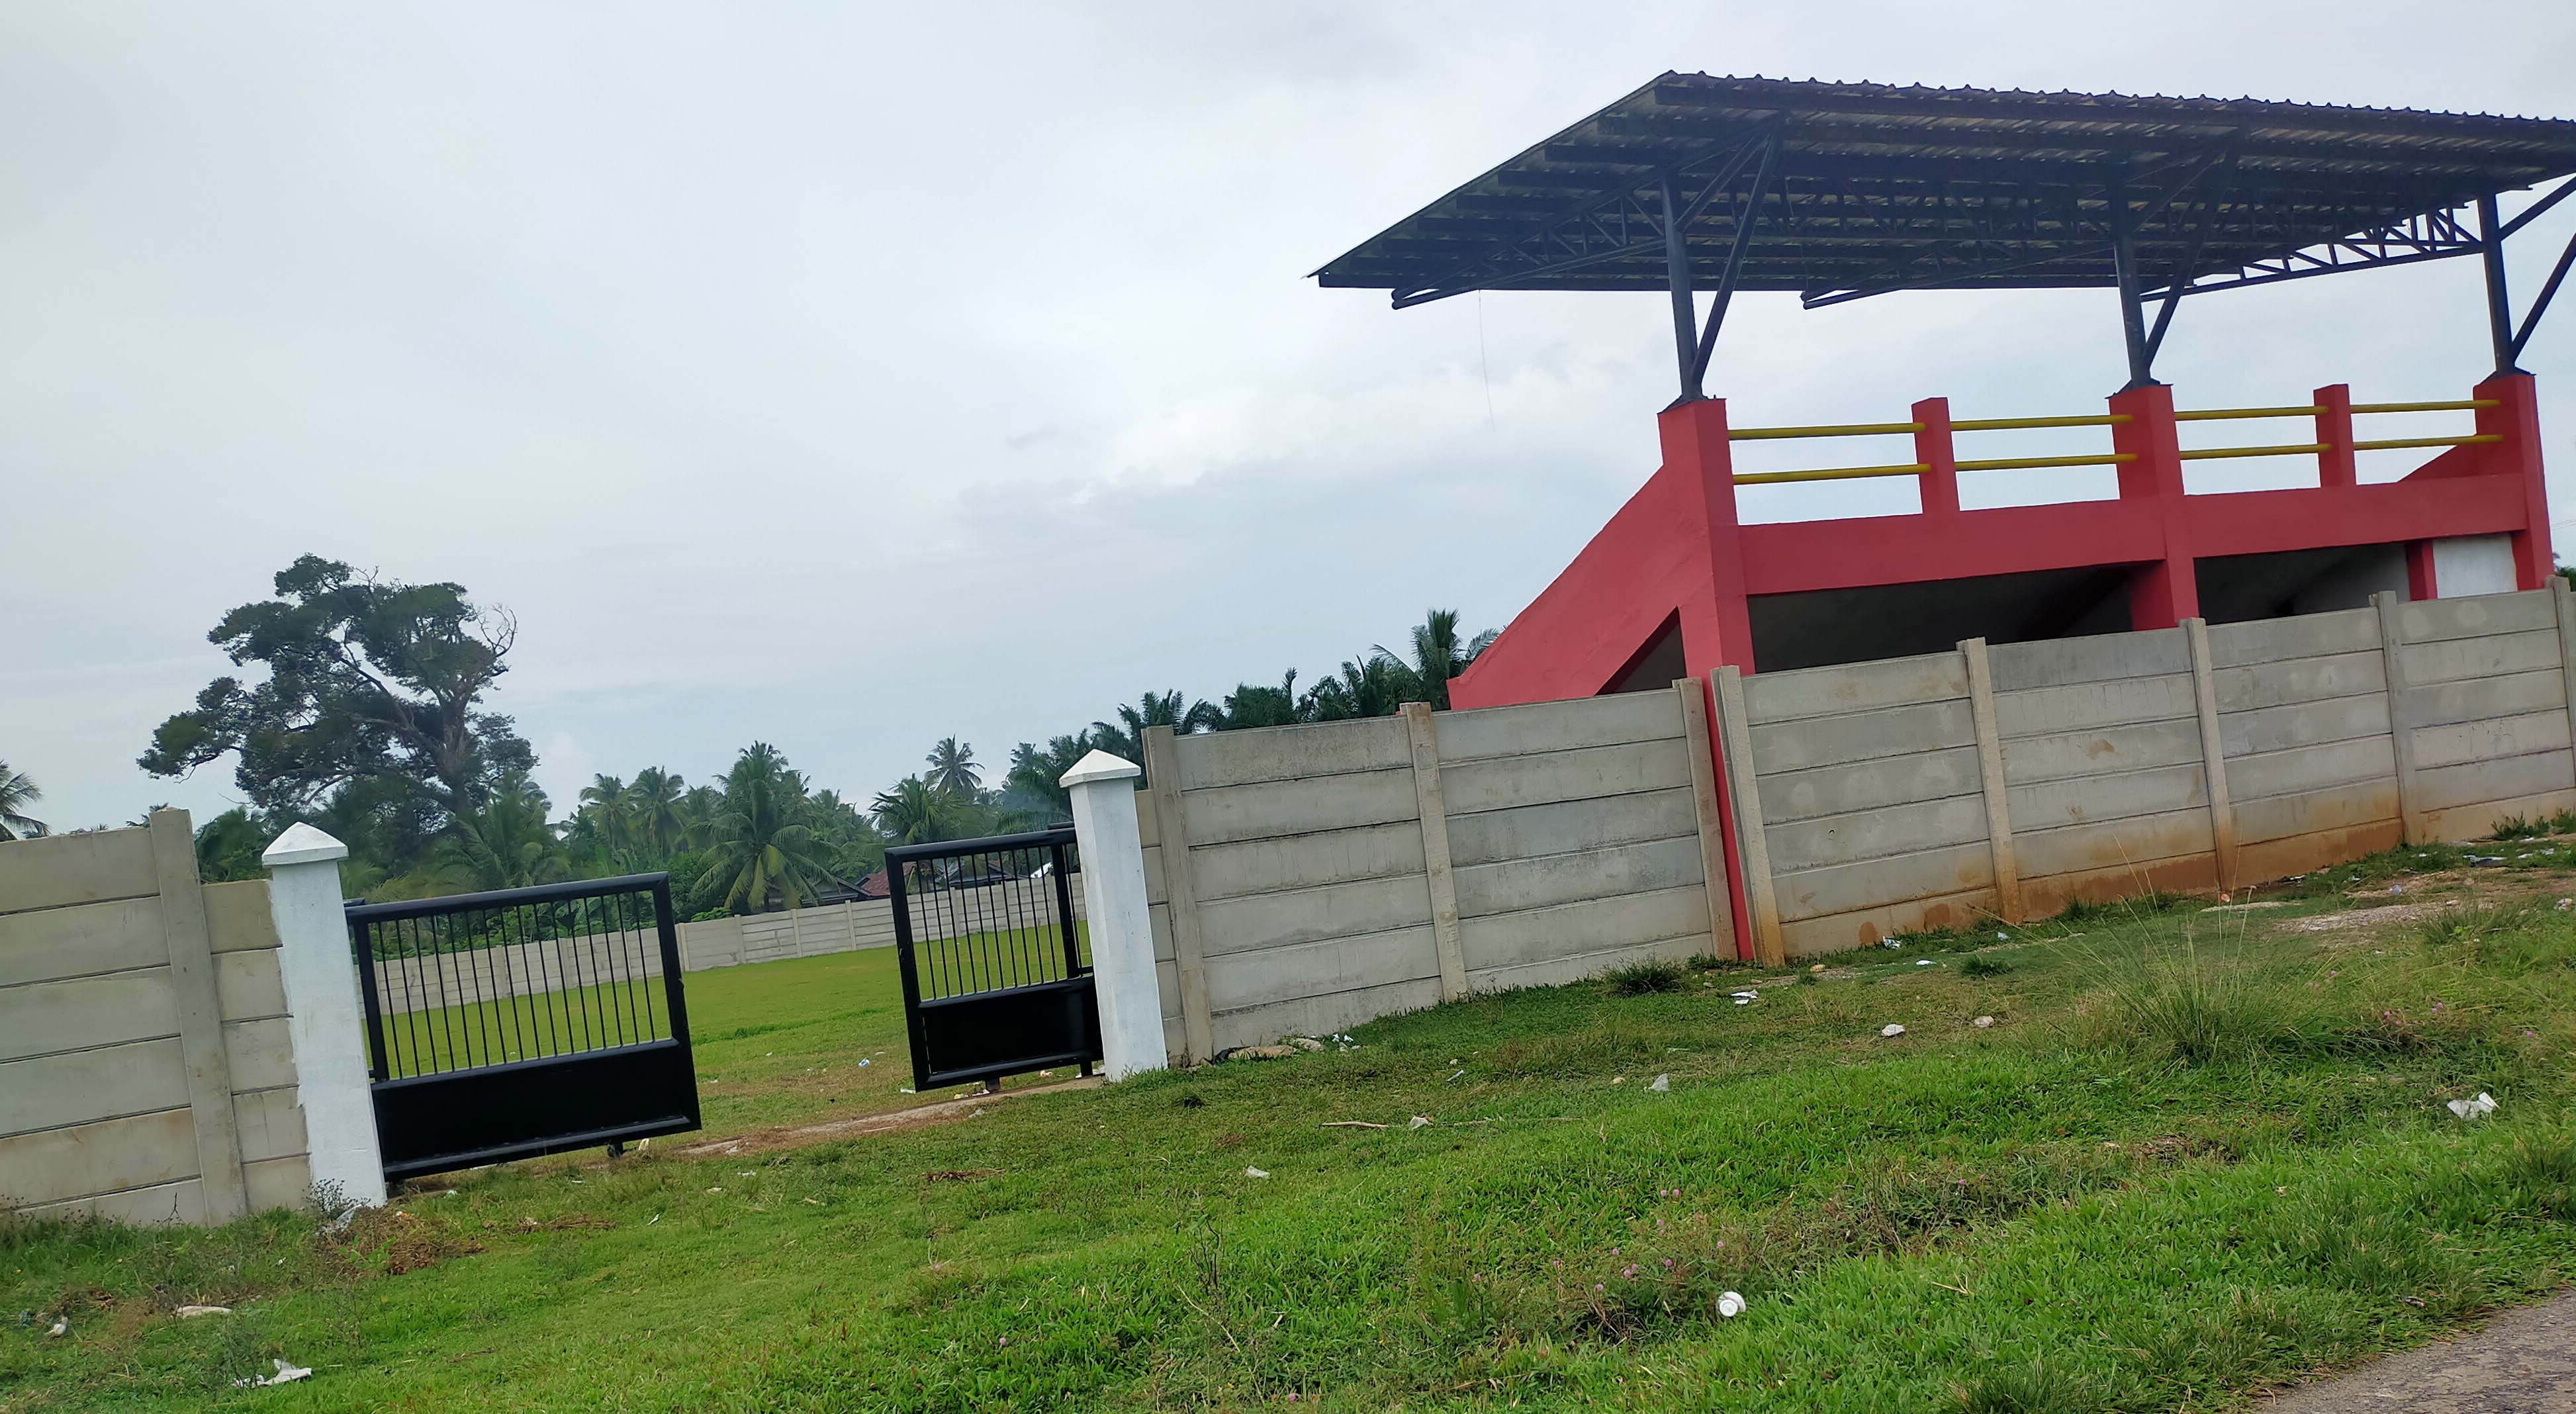  Terbengkalai! Stadion Mini Kayu Kuyit Manna, Bisa Rusak Sebelum Digunakan